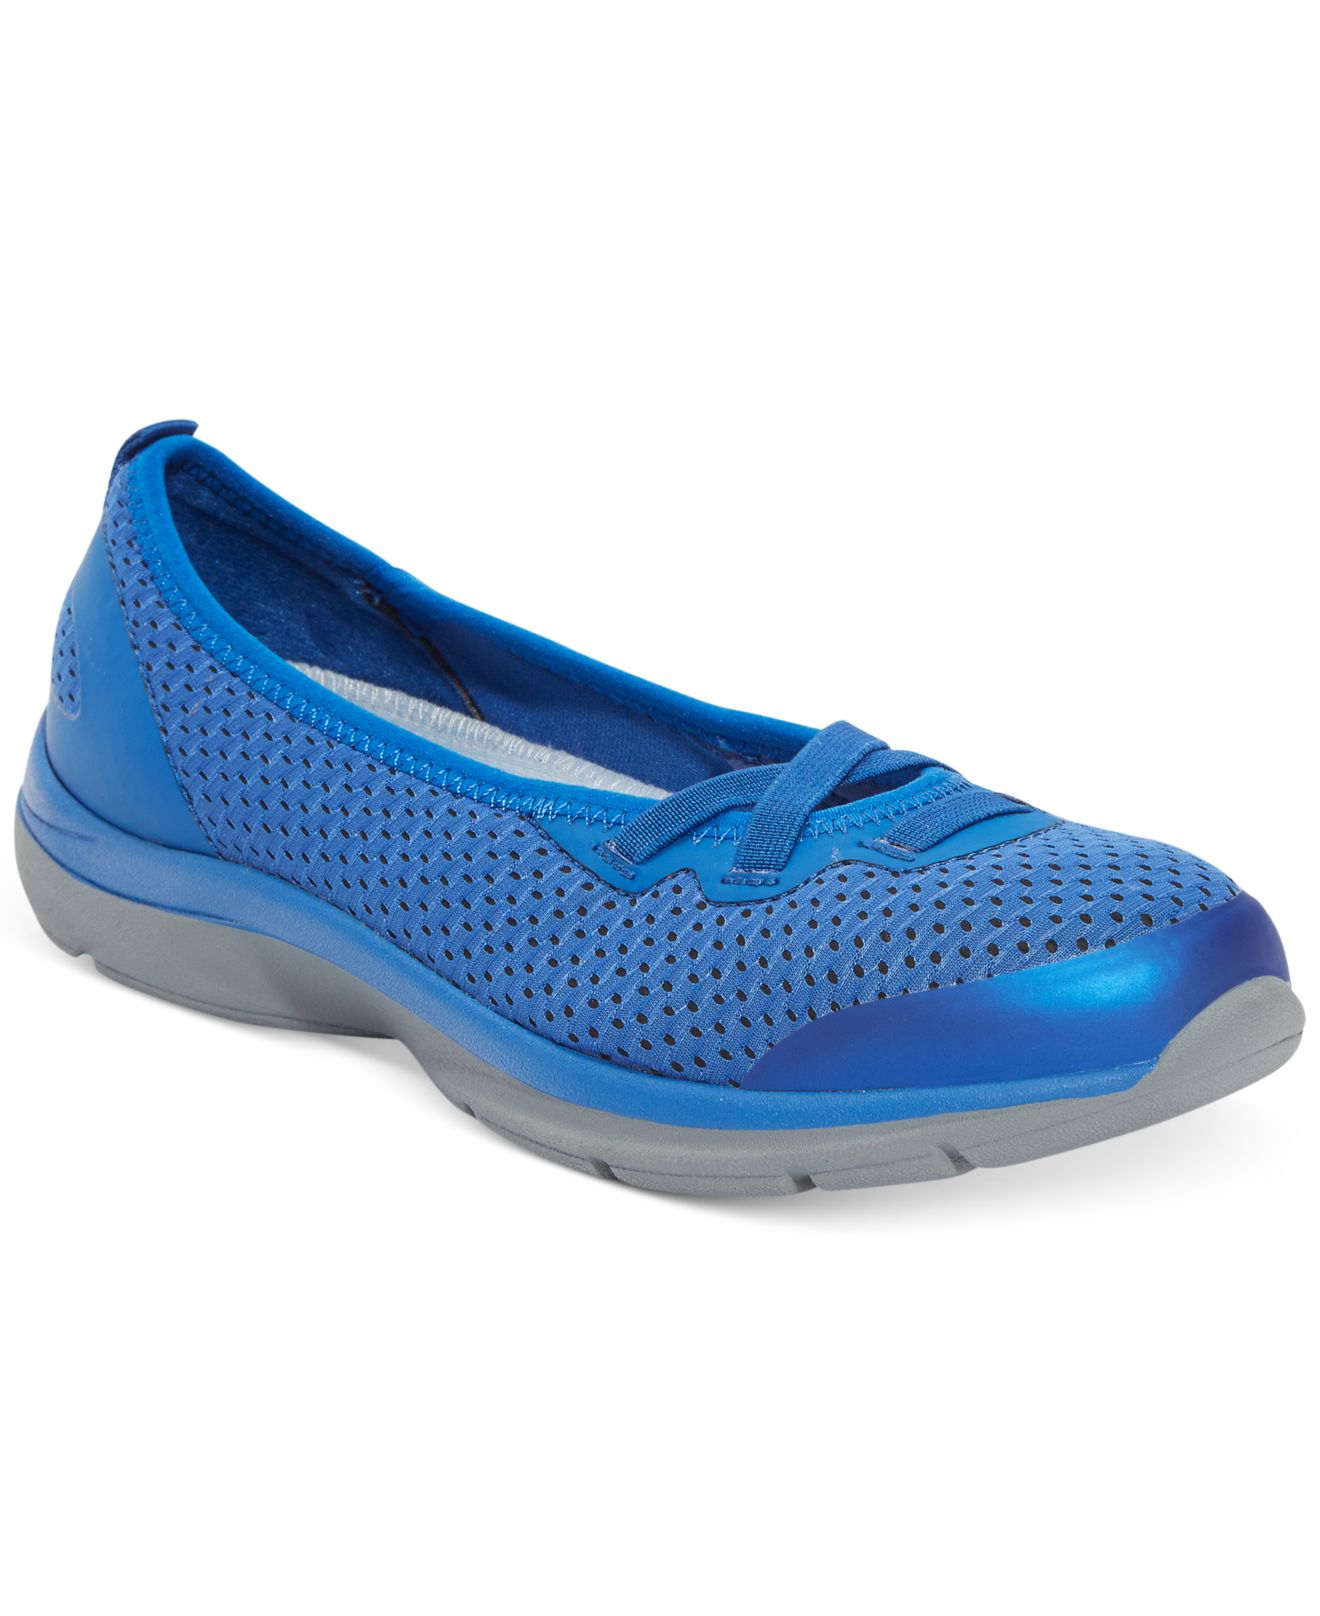 Lyst - Easy Spirit Quietone Sneakers in Blue